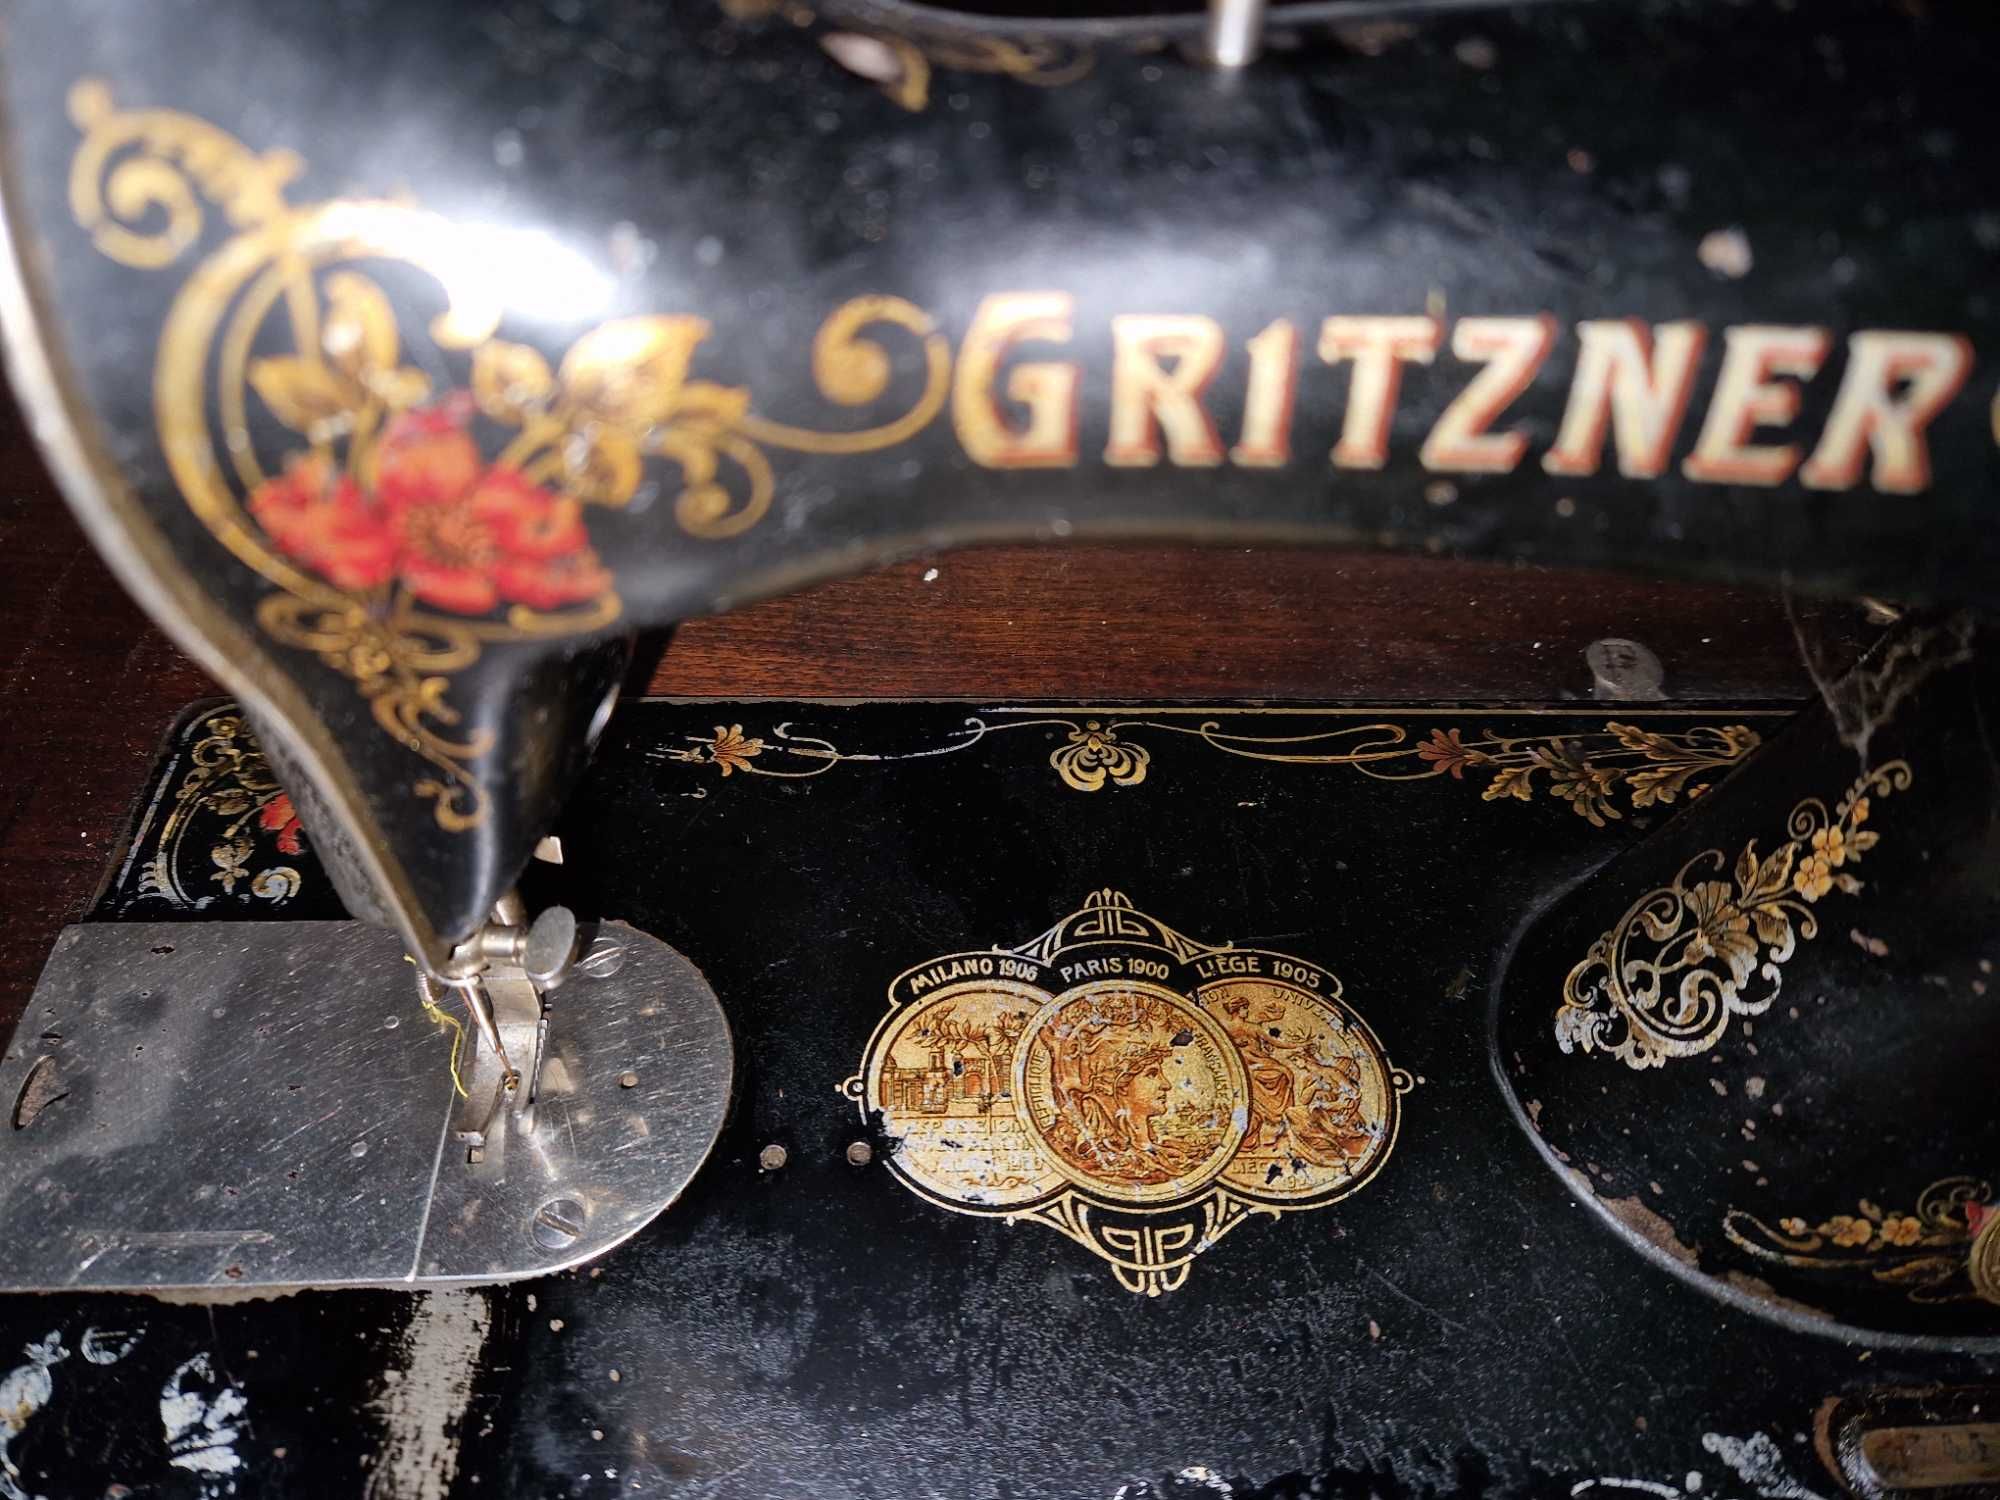 Vand masina de cusut veche Gritzner Durlach seria nr 3444624